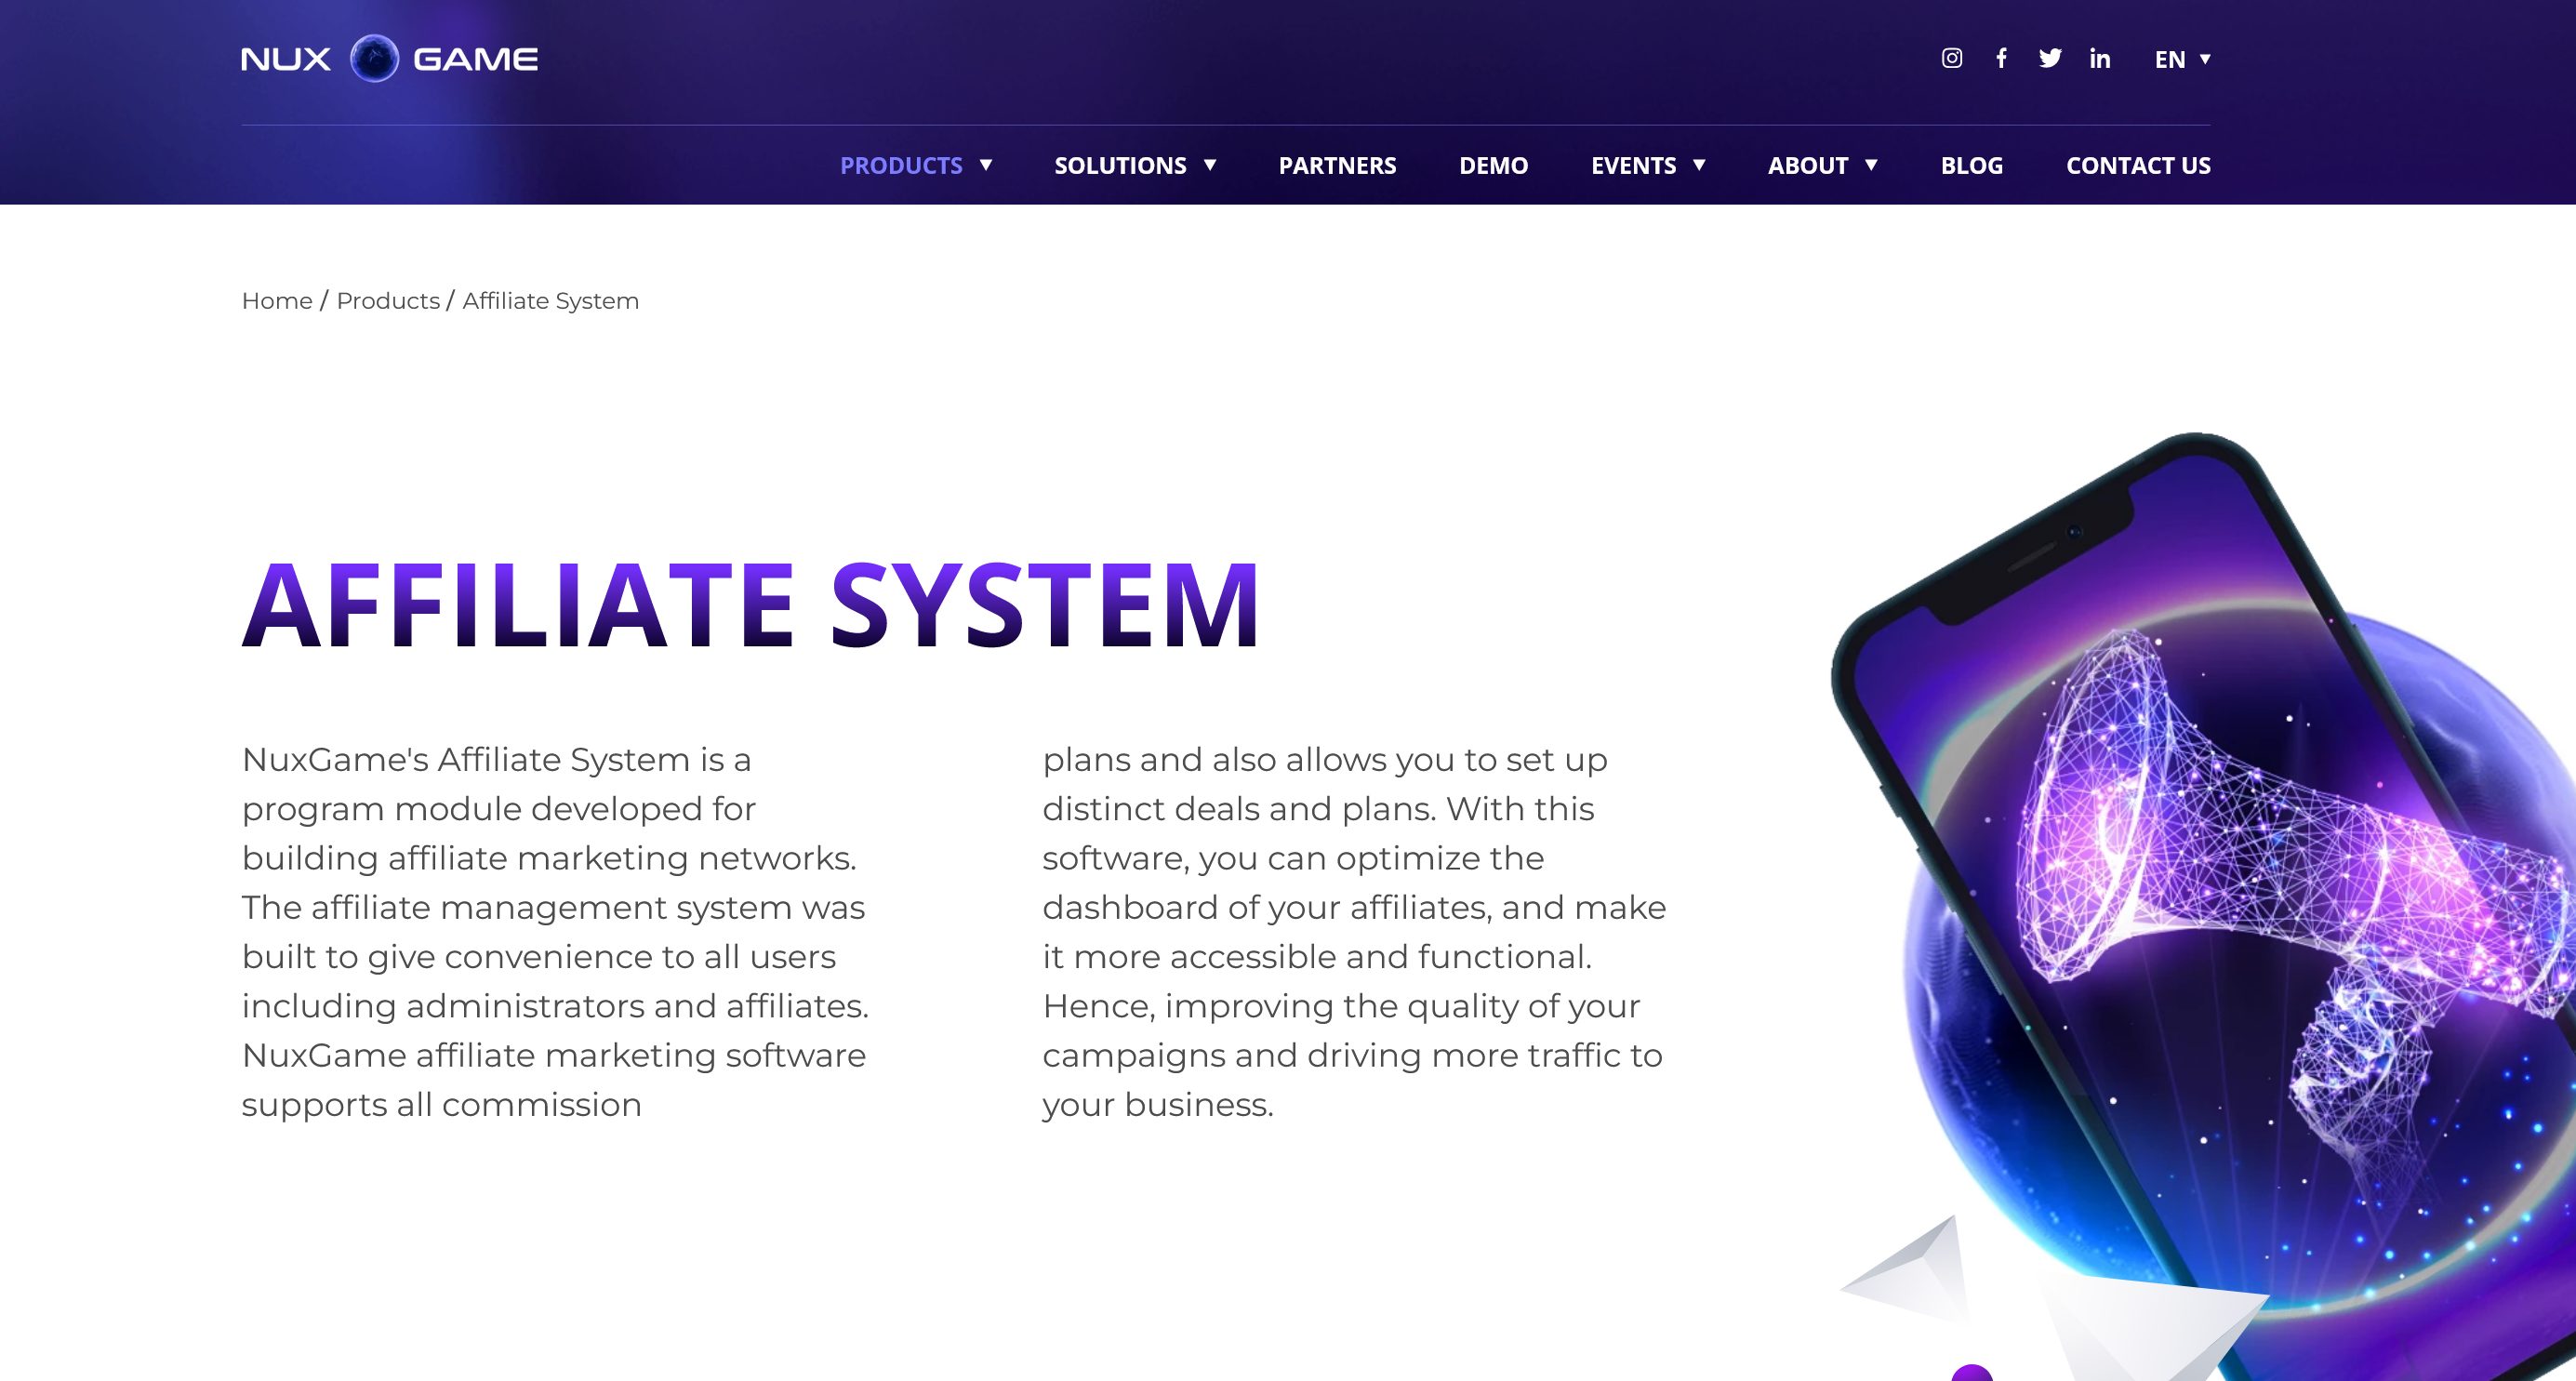 NuxGame Affiliate System عبارة عن وحدة برنامجية مصممة لإنشاء شبكات التسويق بالعمولة.